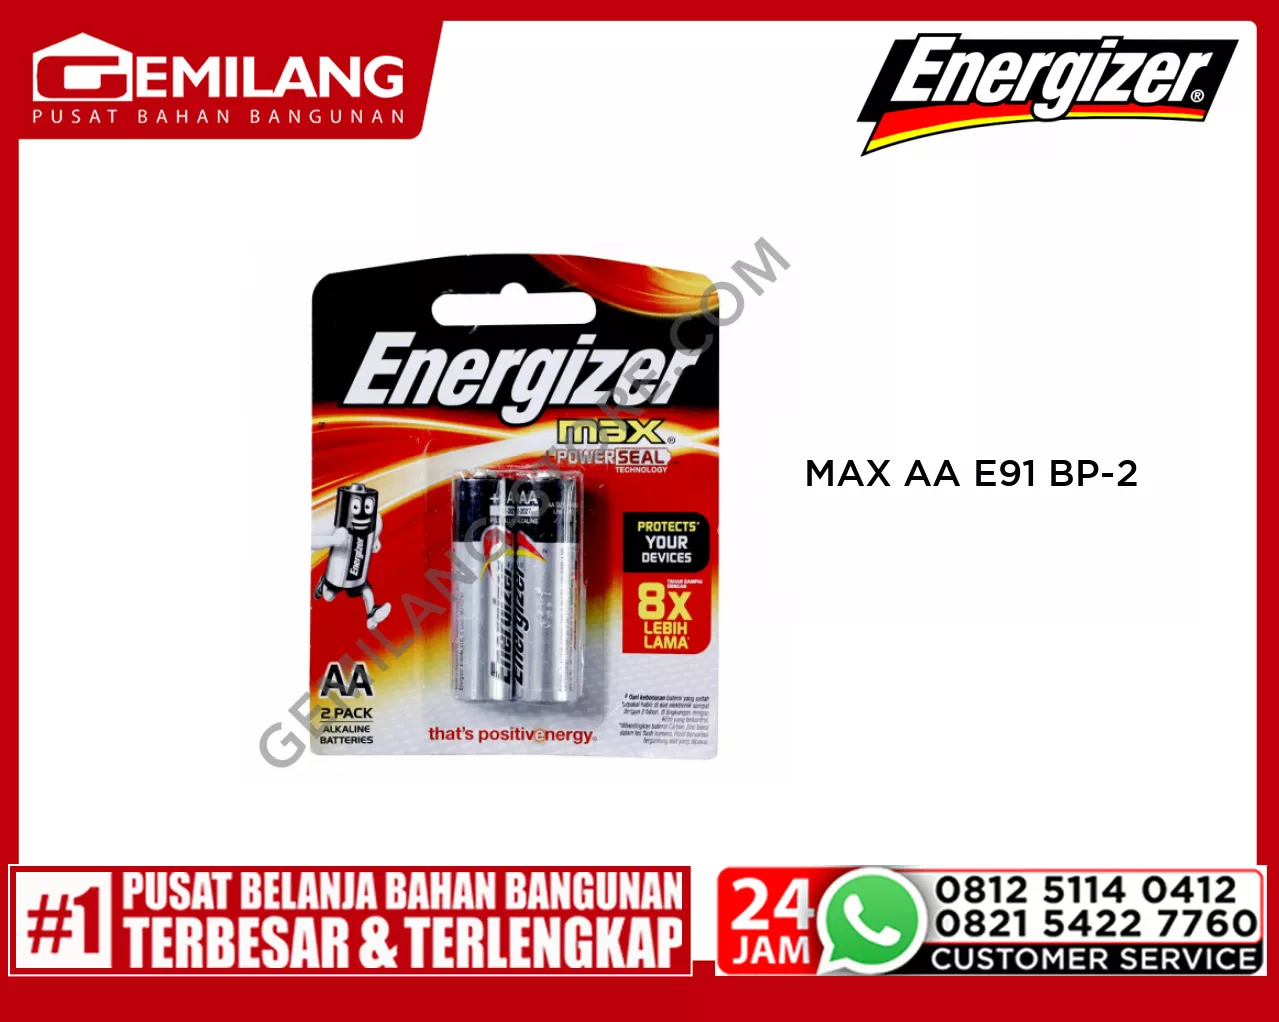 ENERGIZER MAX AA (E91 BP-2)